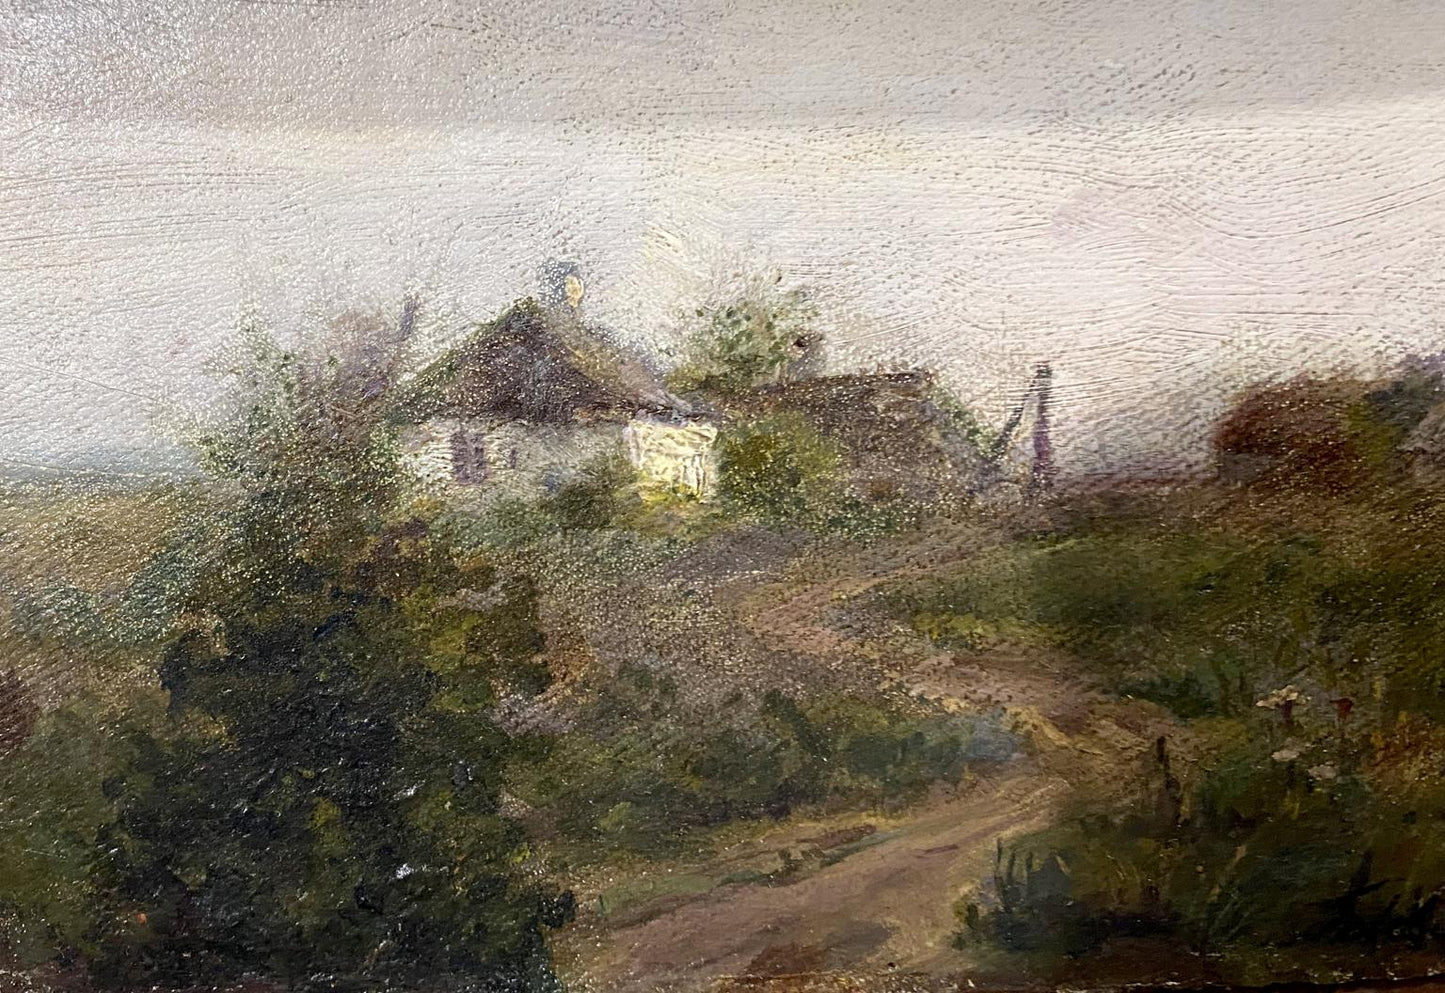 Oil painting Way home Levchenko Potr Alekseyevich